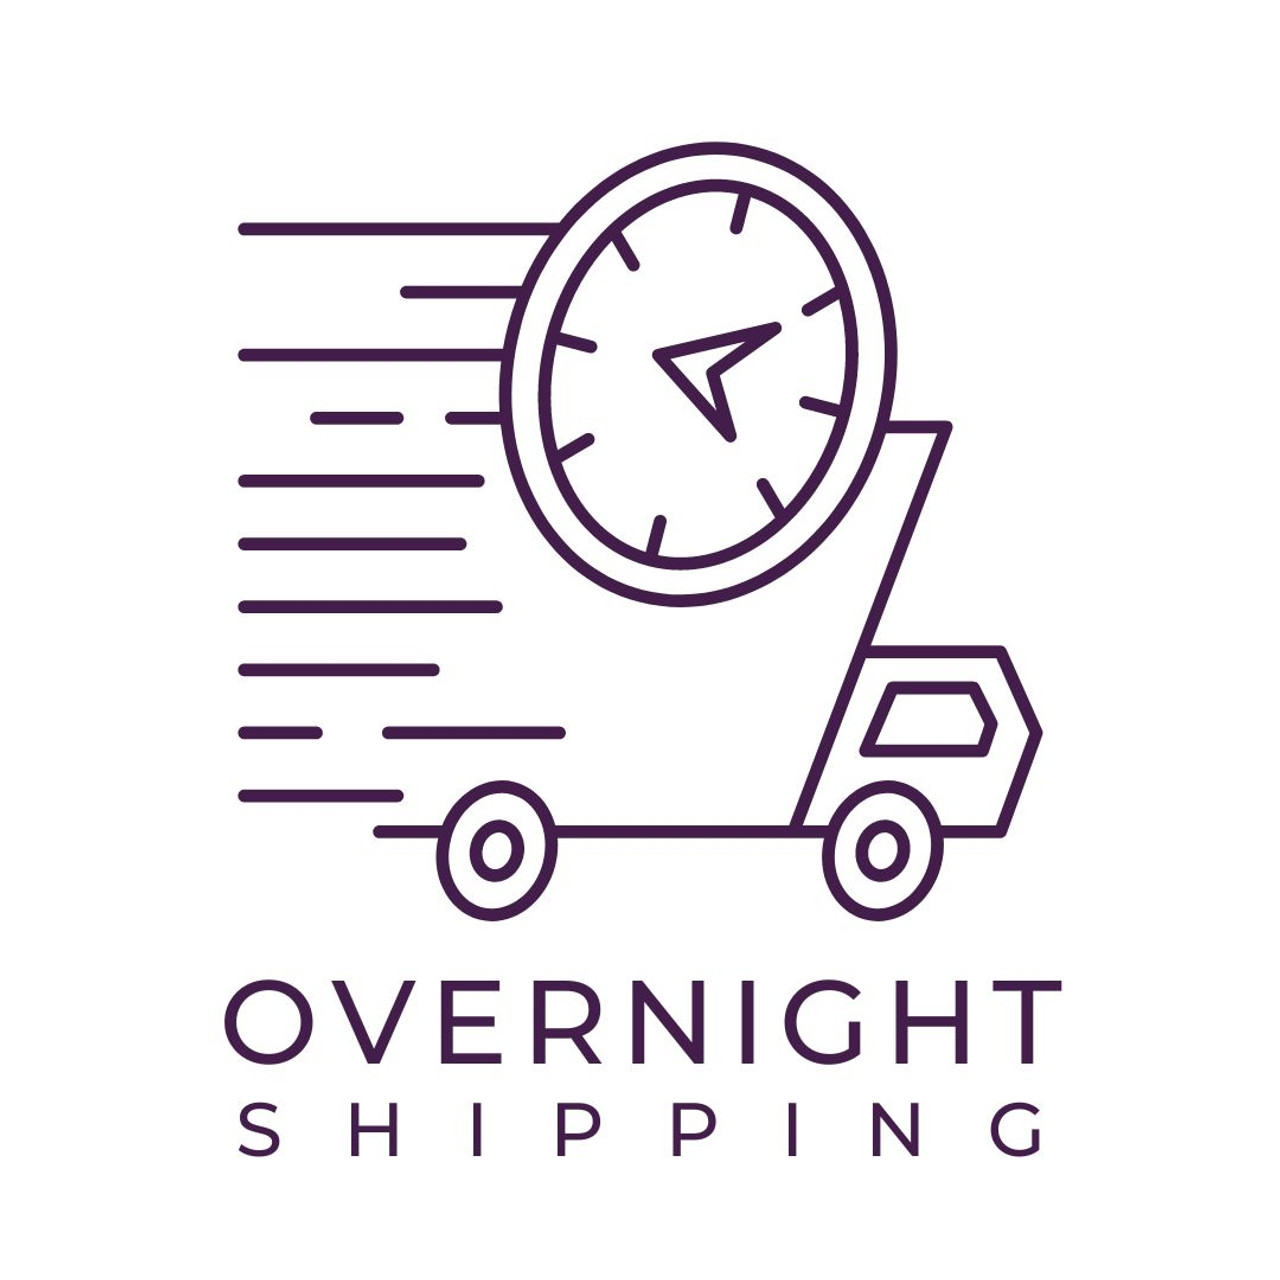 Overnight Shipping